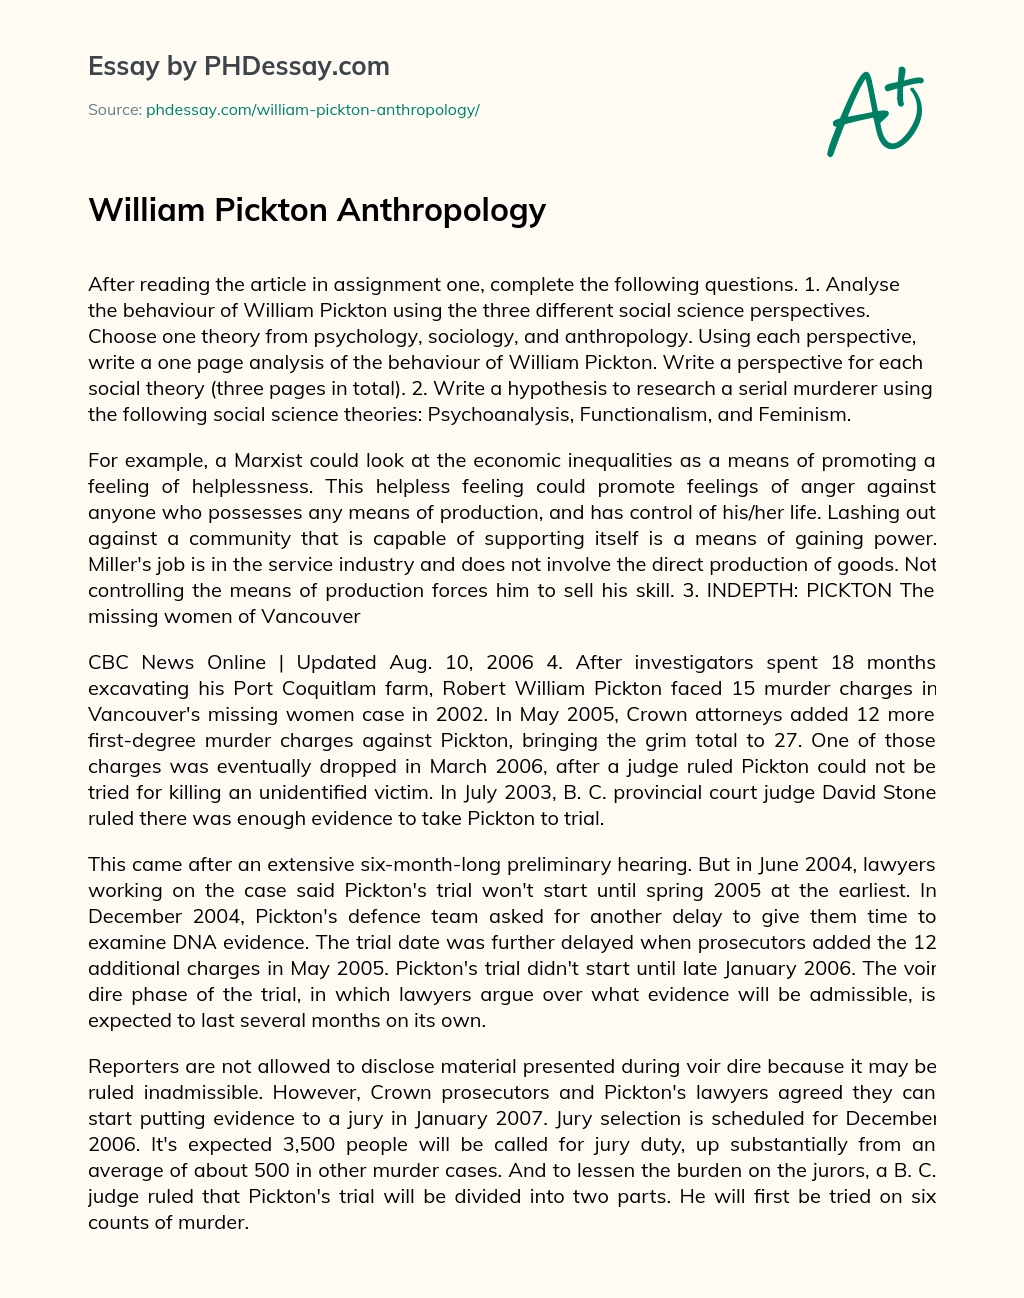 William Pickton Anthropology essay